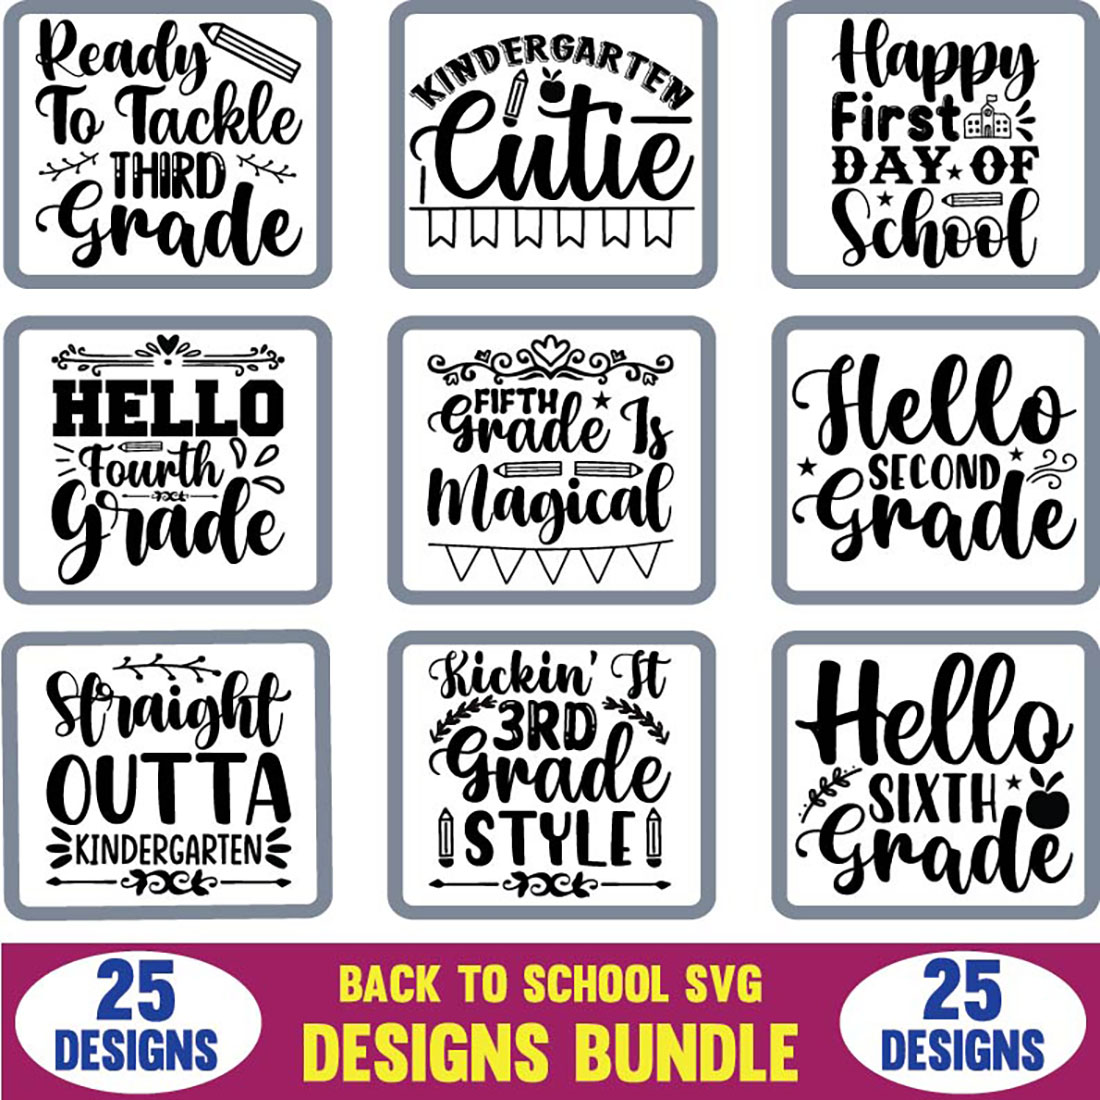 Back To School SVG Designs Bundle cover